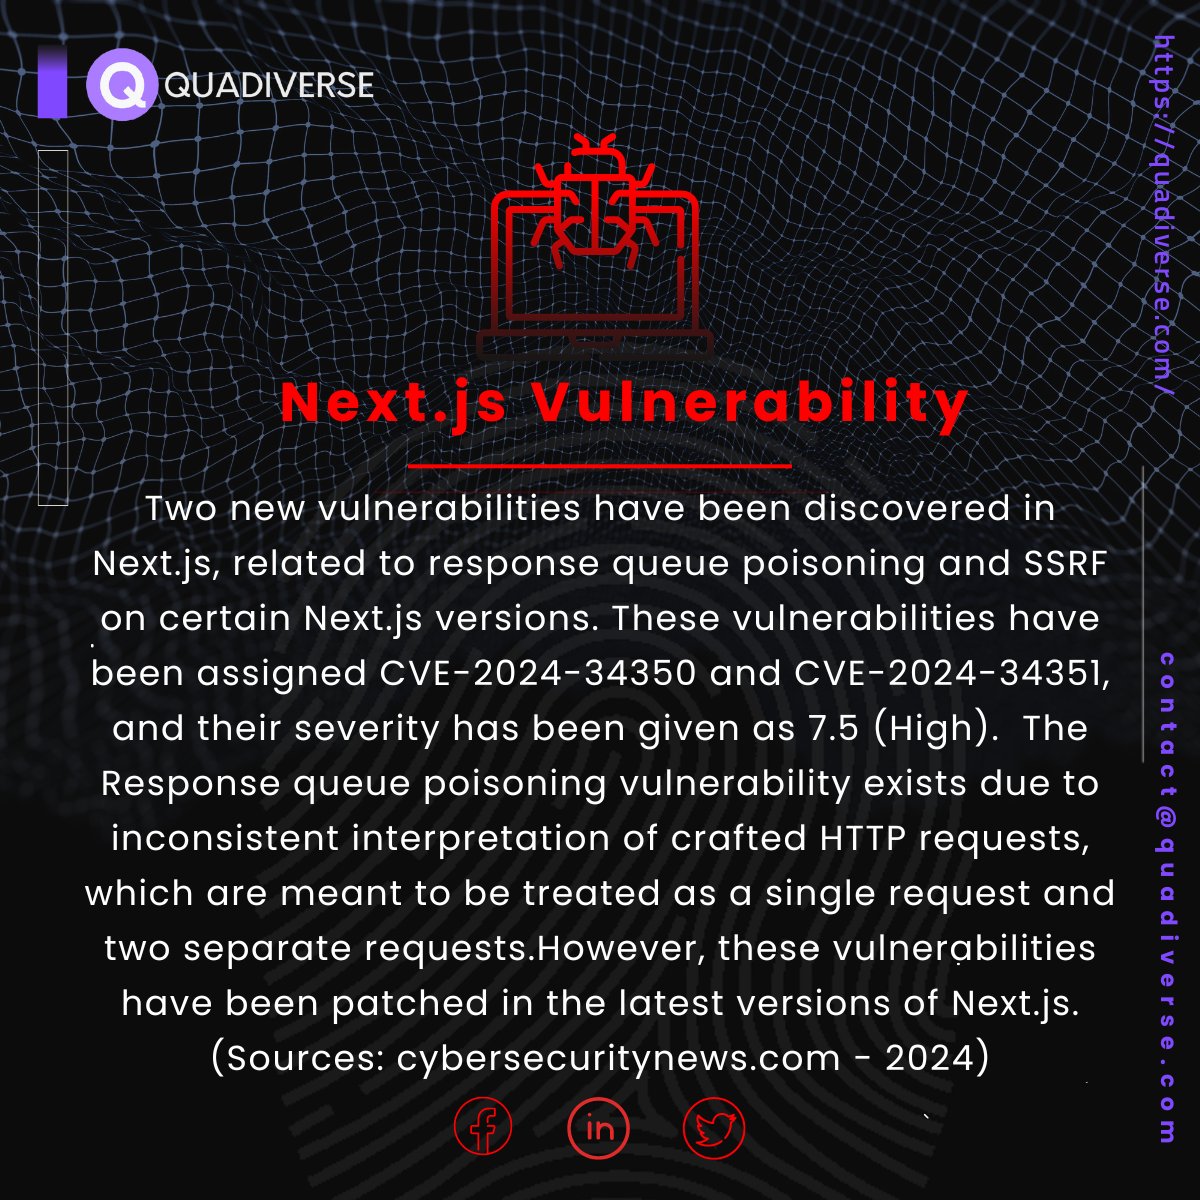 Visit us at: quadiverse.com
.
.
#quadiverse #softwareupdates #securityalerts #cybersecurity #SoftwareTesting #qa #quadiverse #automation #qualityassurance #Tech #vulnerable #bugs #bugfree #defects #vulnerbilities